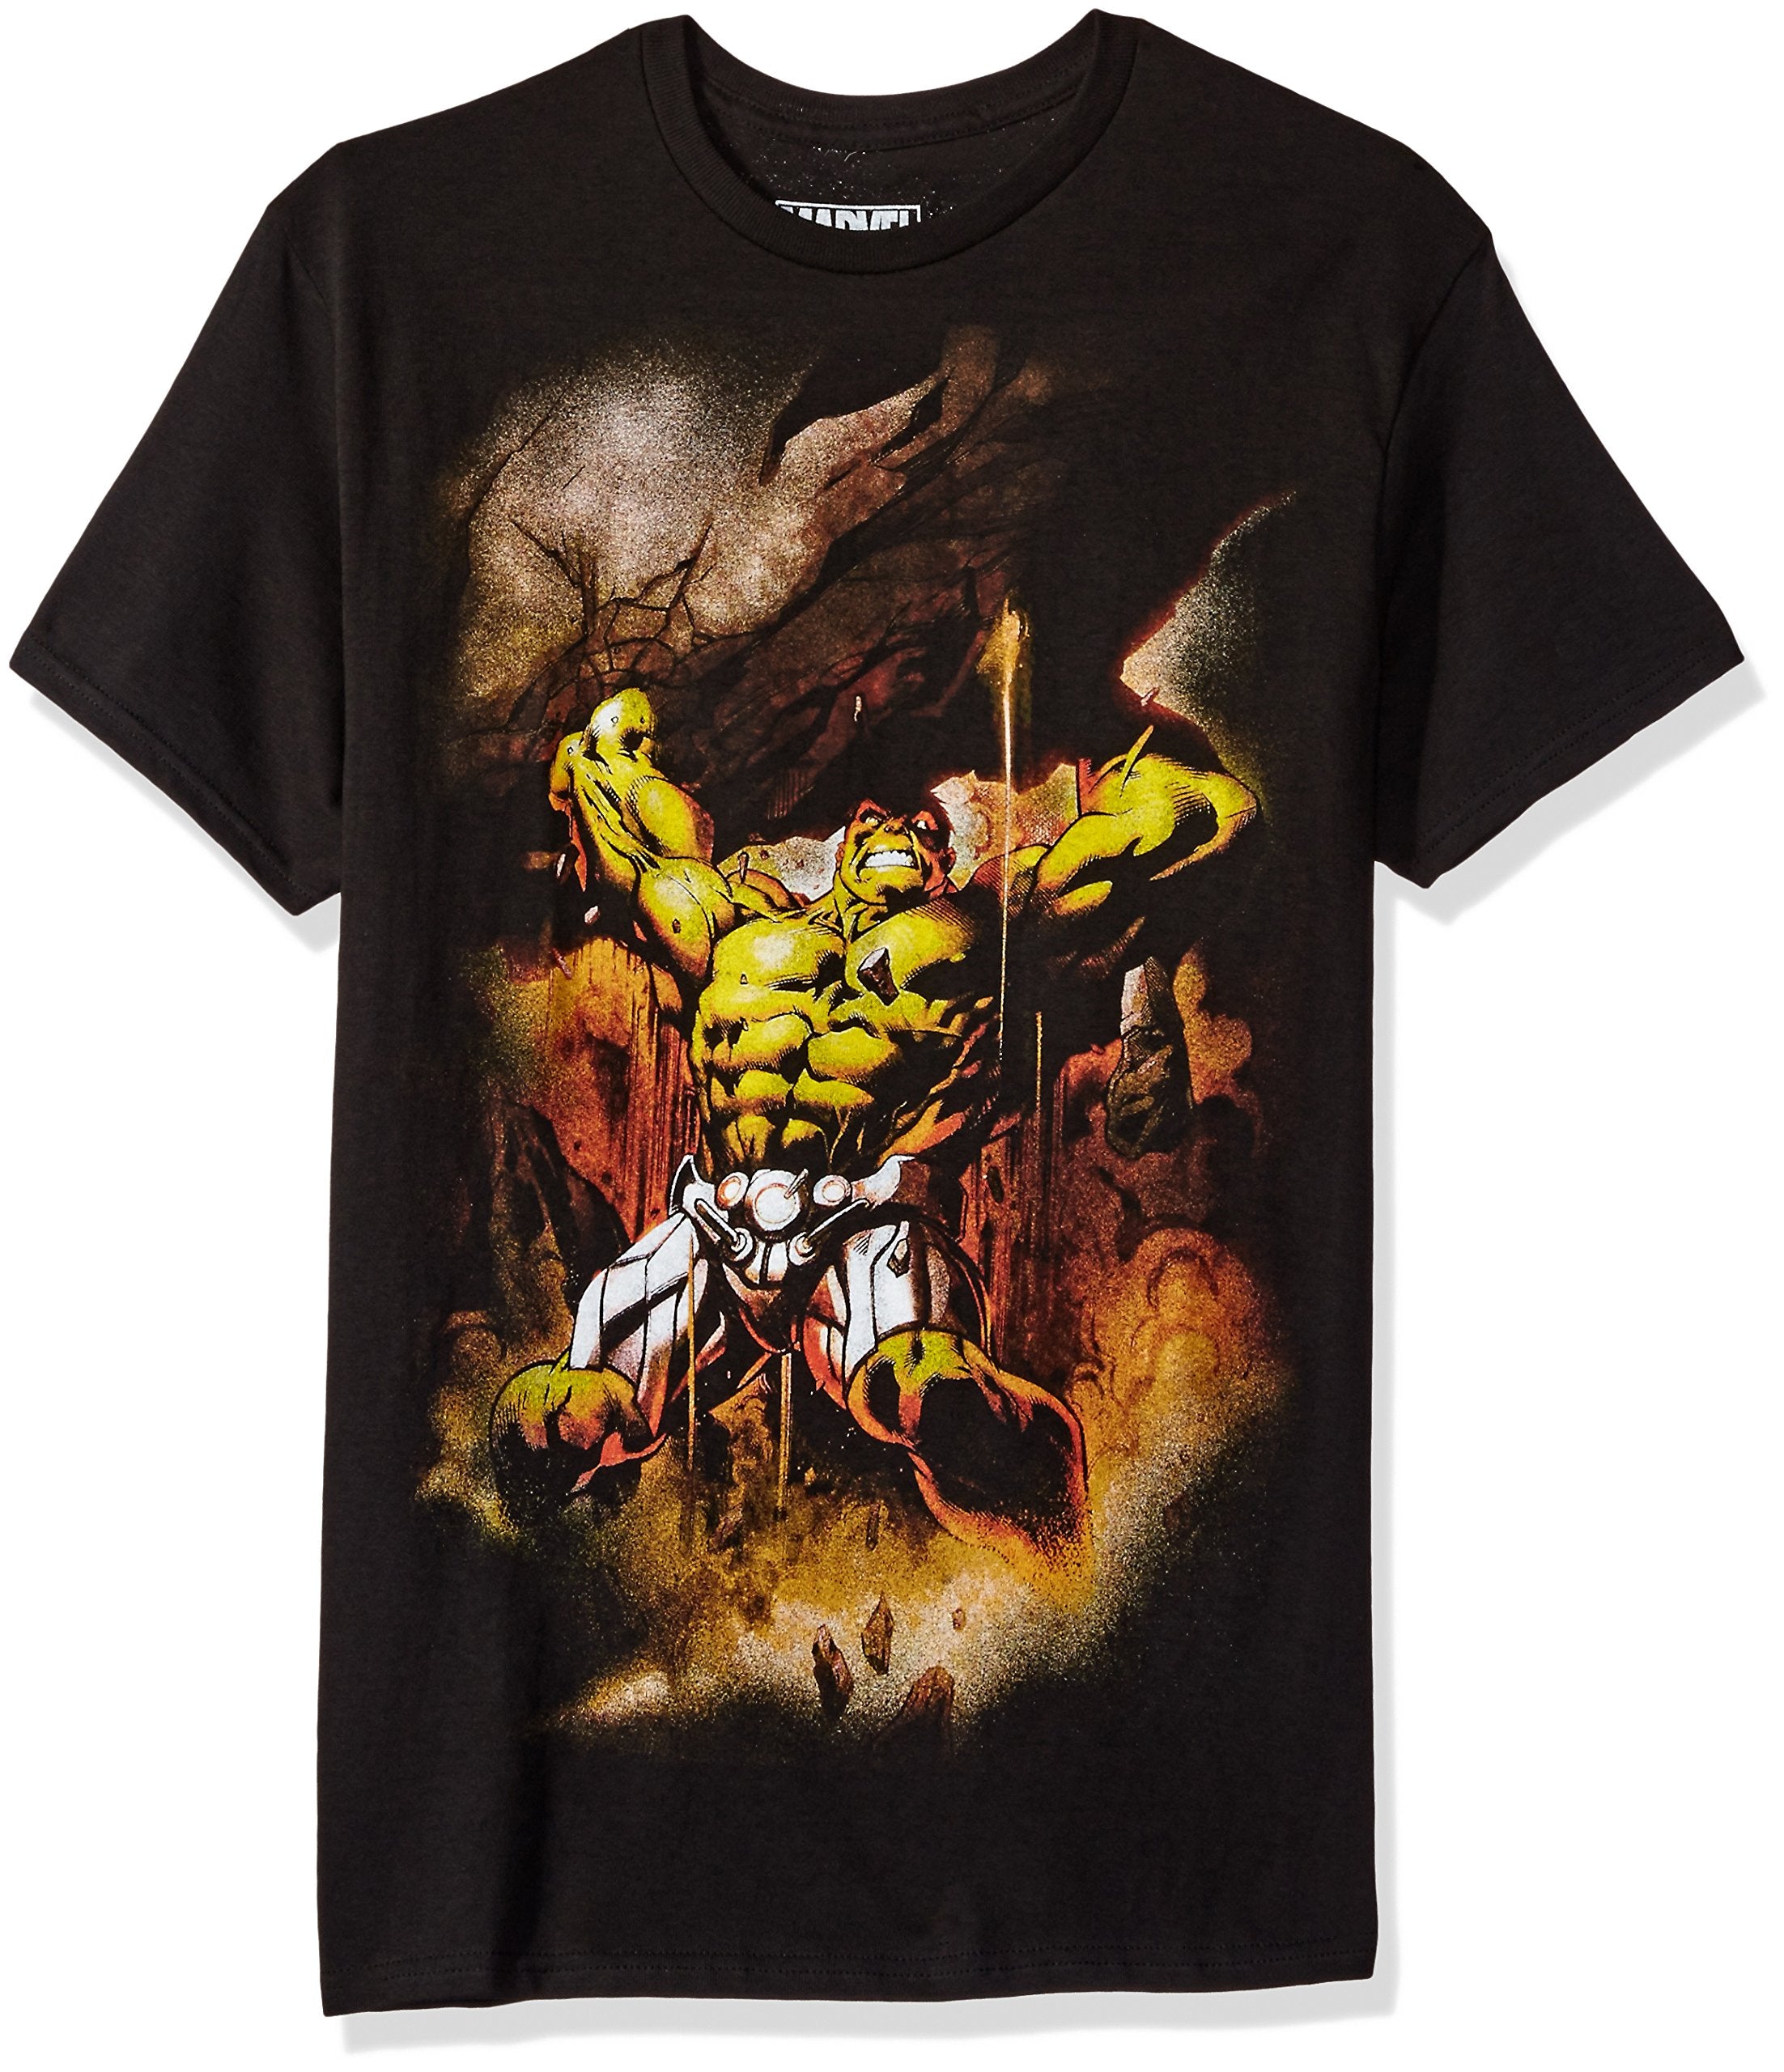 Hulk (Marvel) Mens T-Shirt - Incredible Hulk Holding Holding Up Crushing Rocks